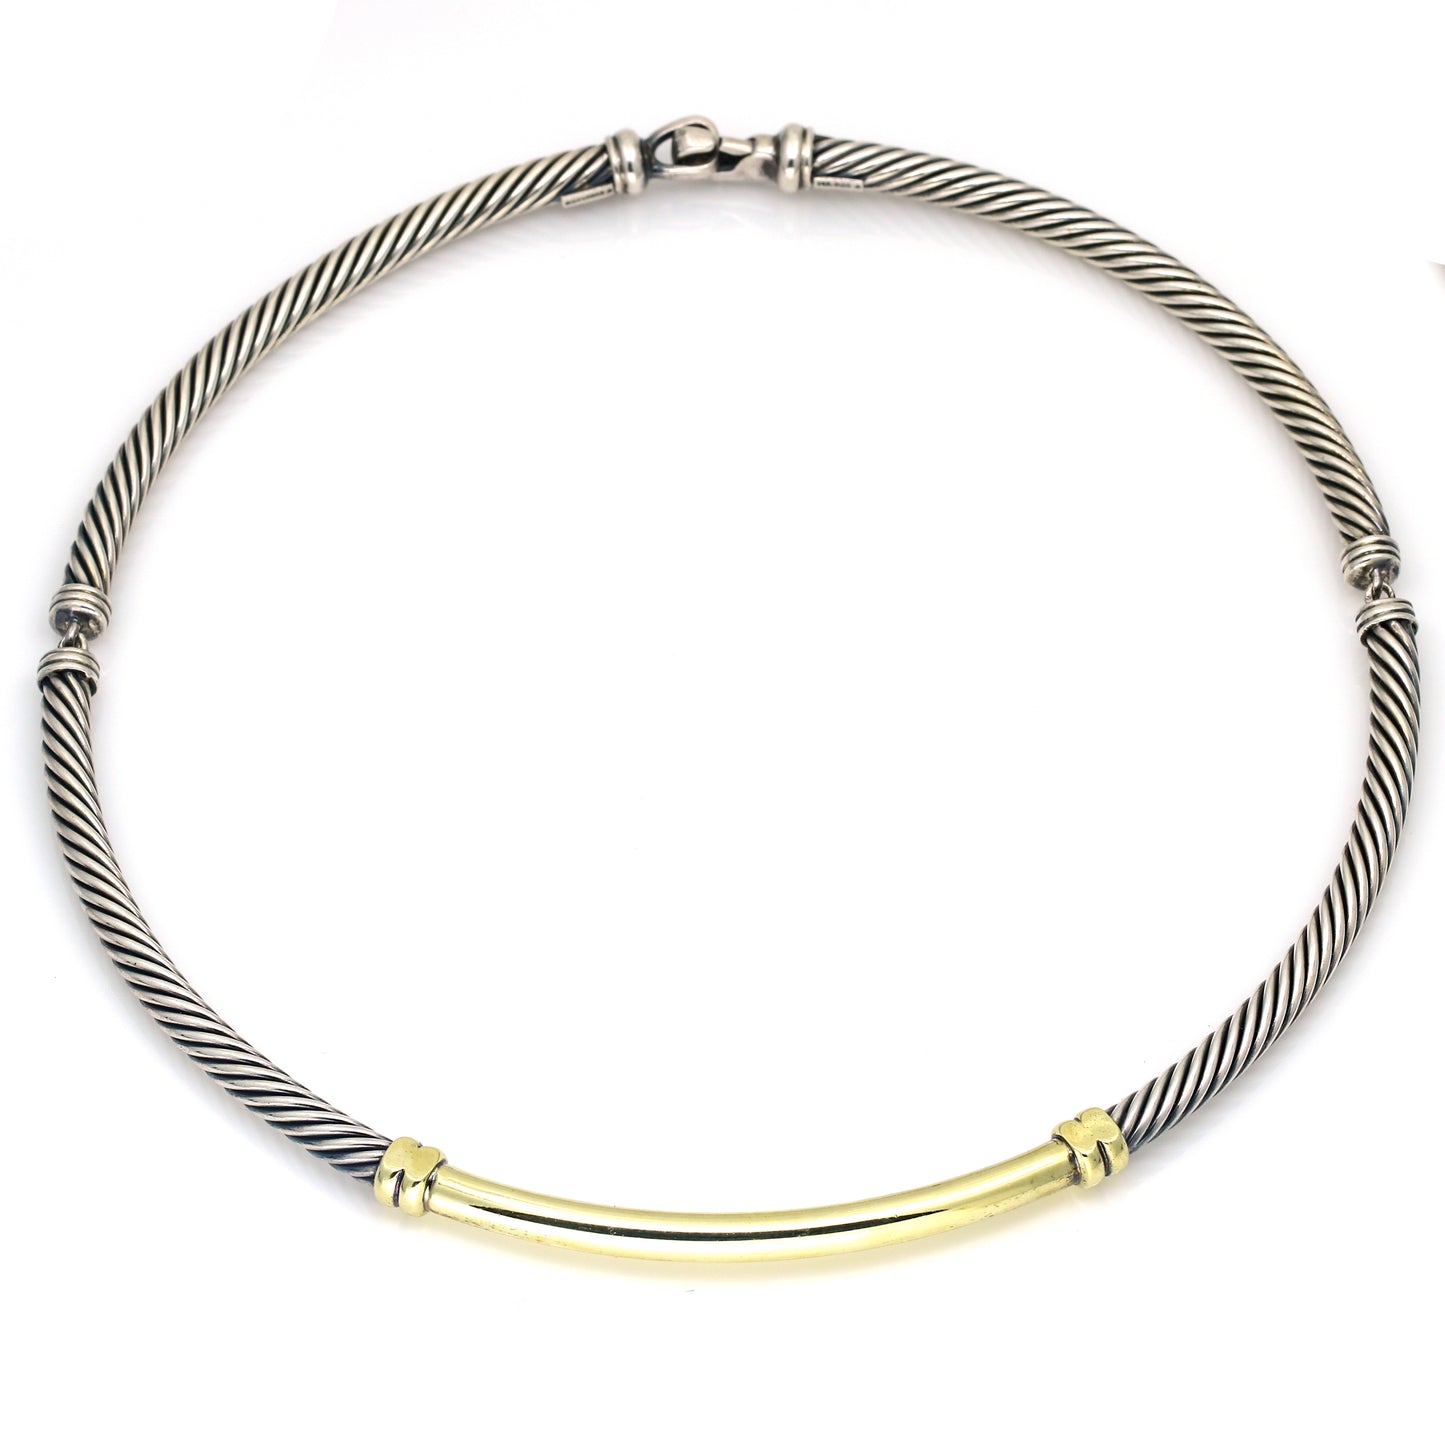 Women's David Yurman Metro Choker Necklace in Sterling Silver and 14k Yellow Gold